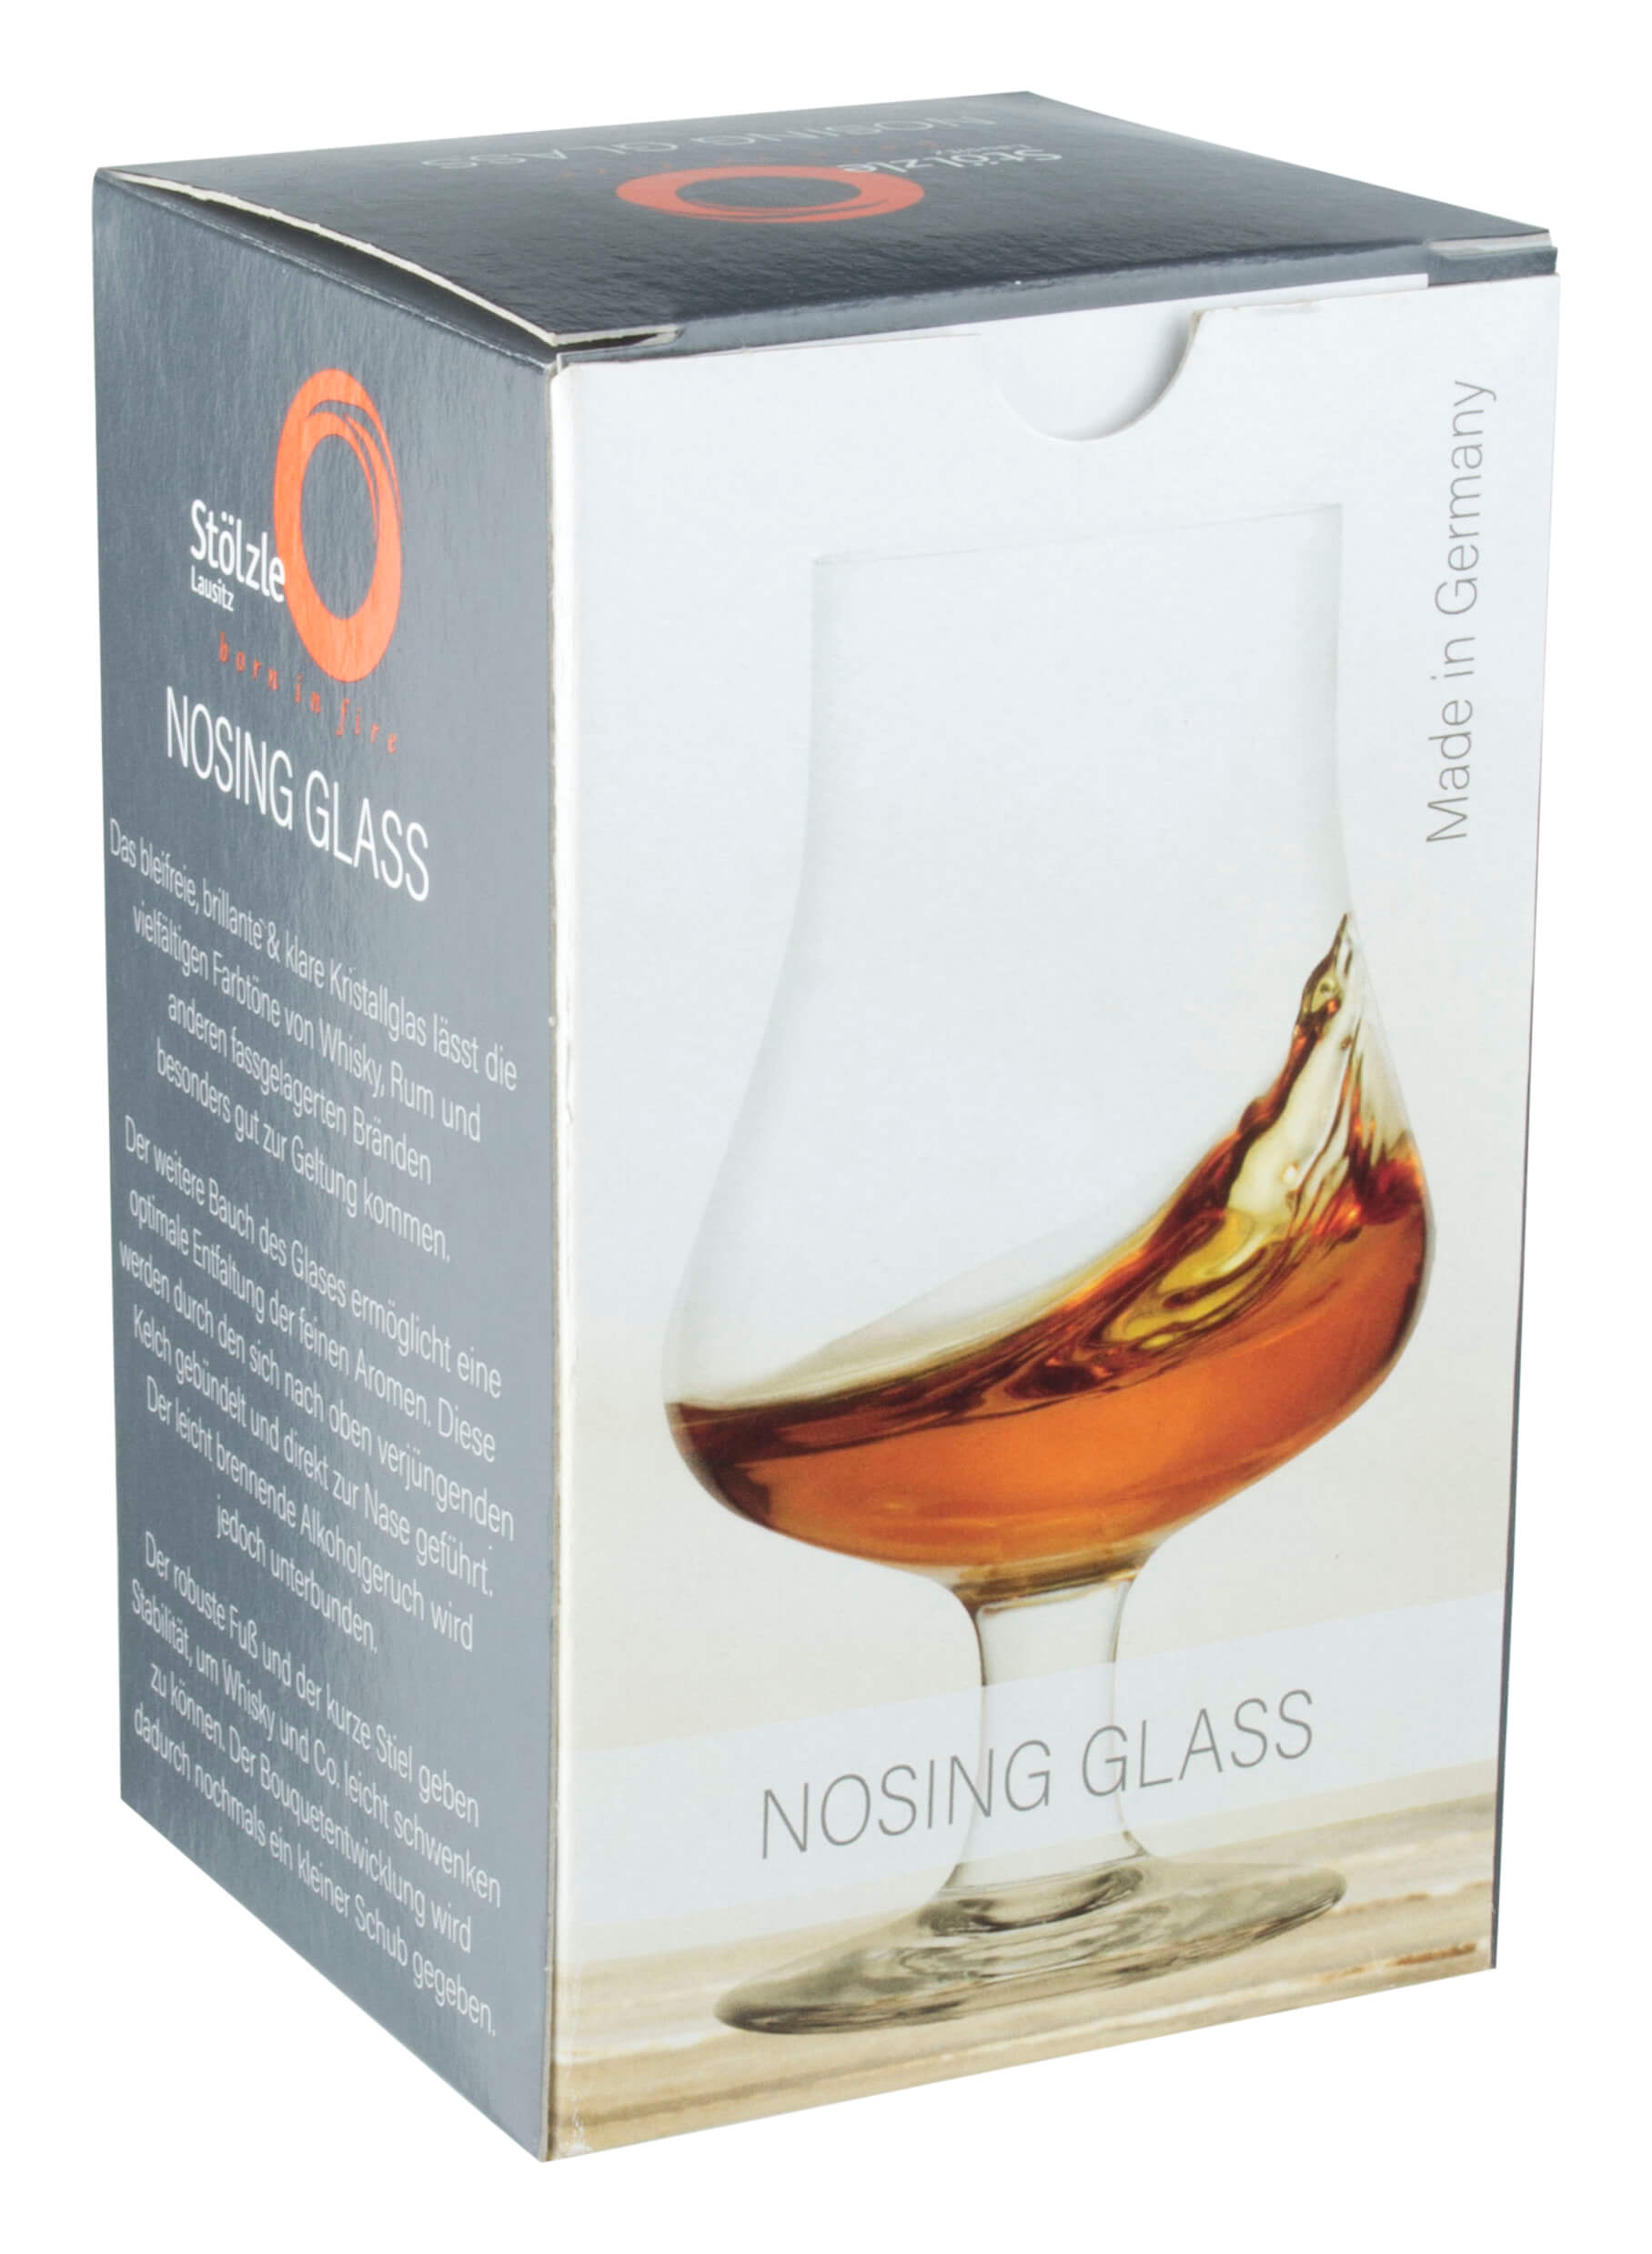 Nosing glass, Stölzle, Gift packaging - 194ml